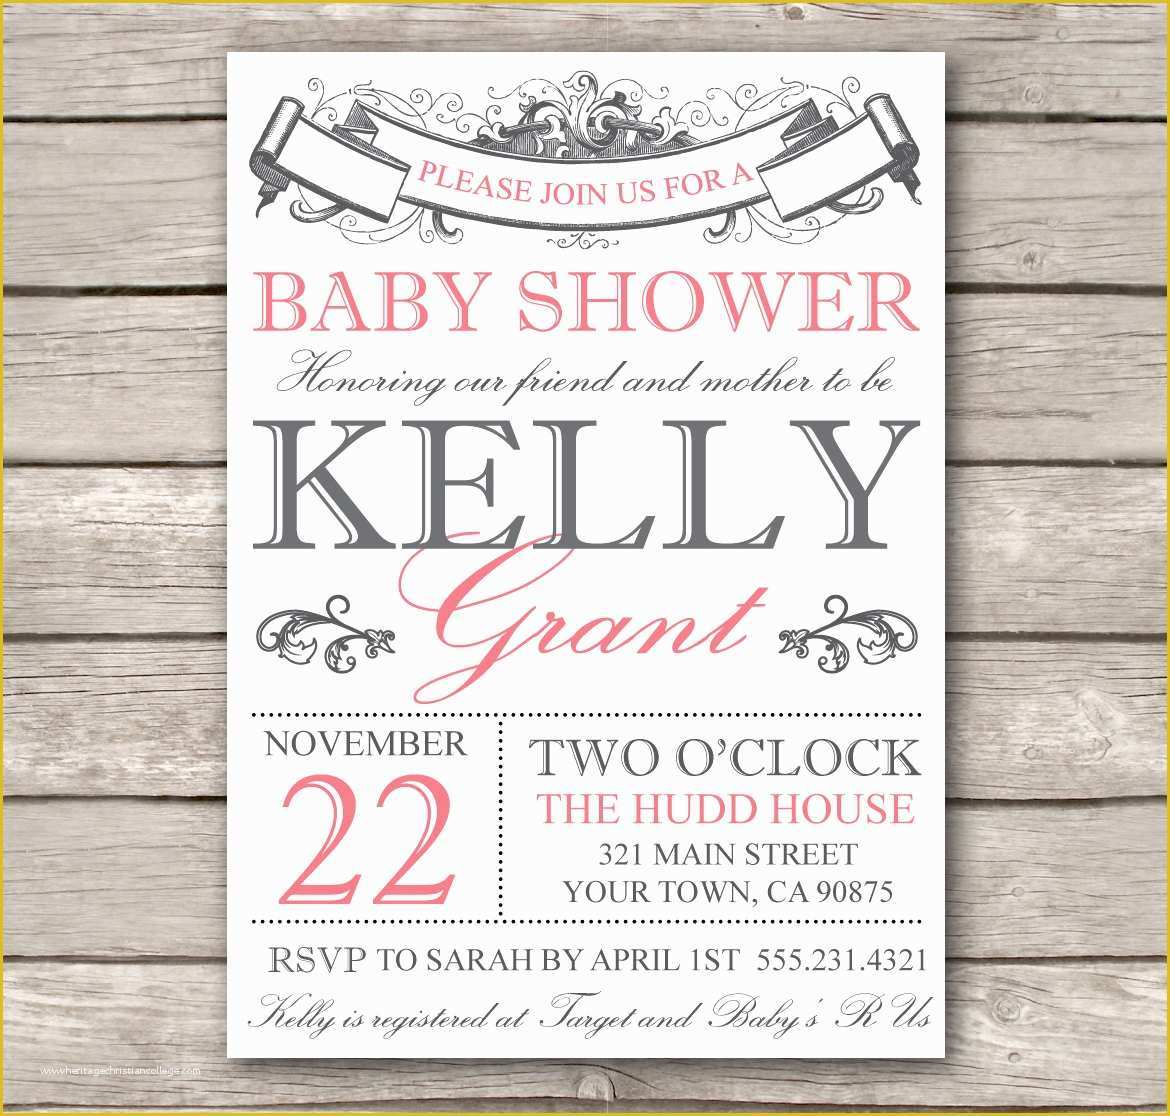 Free Bridal Shower Invitation Templates Of Bridal Shower Invitation or Baby Shower Invitation by